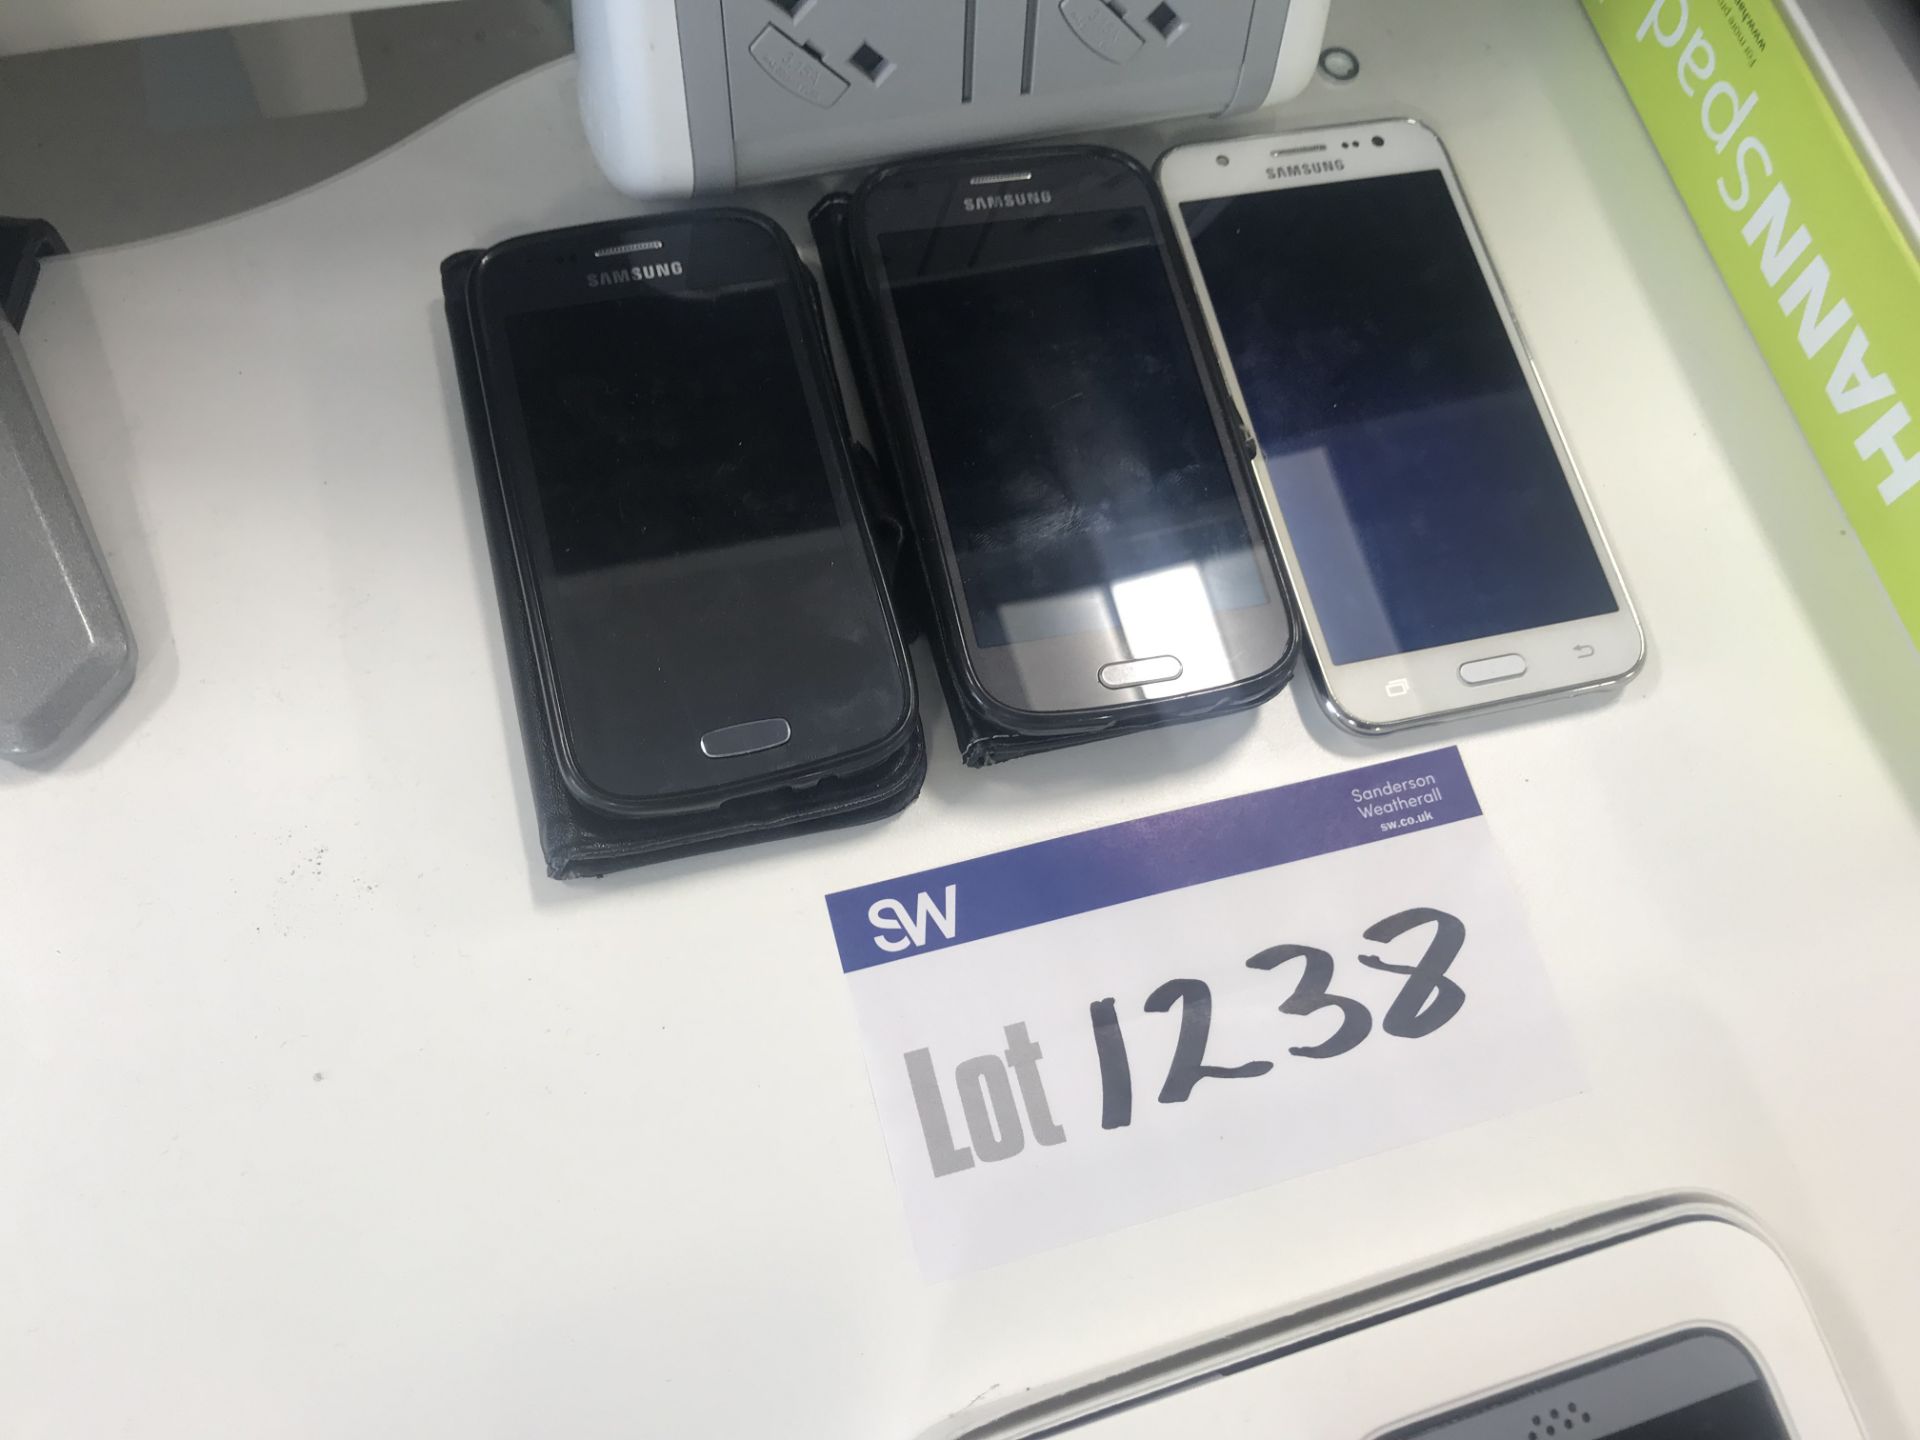 3 x Assorted Samsung Mobile Phone Handsets